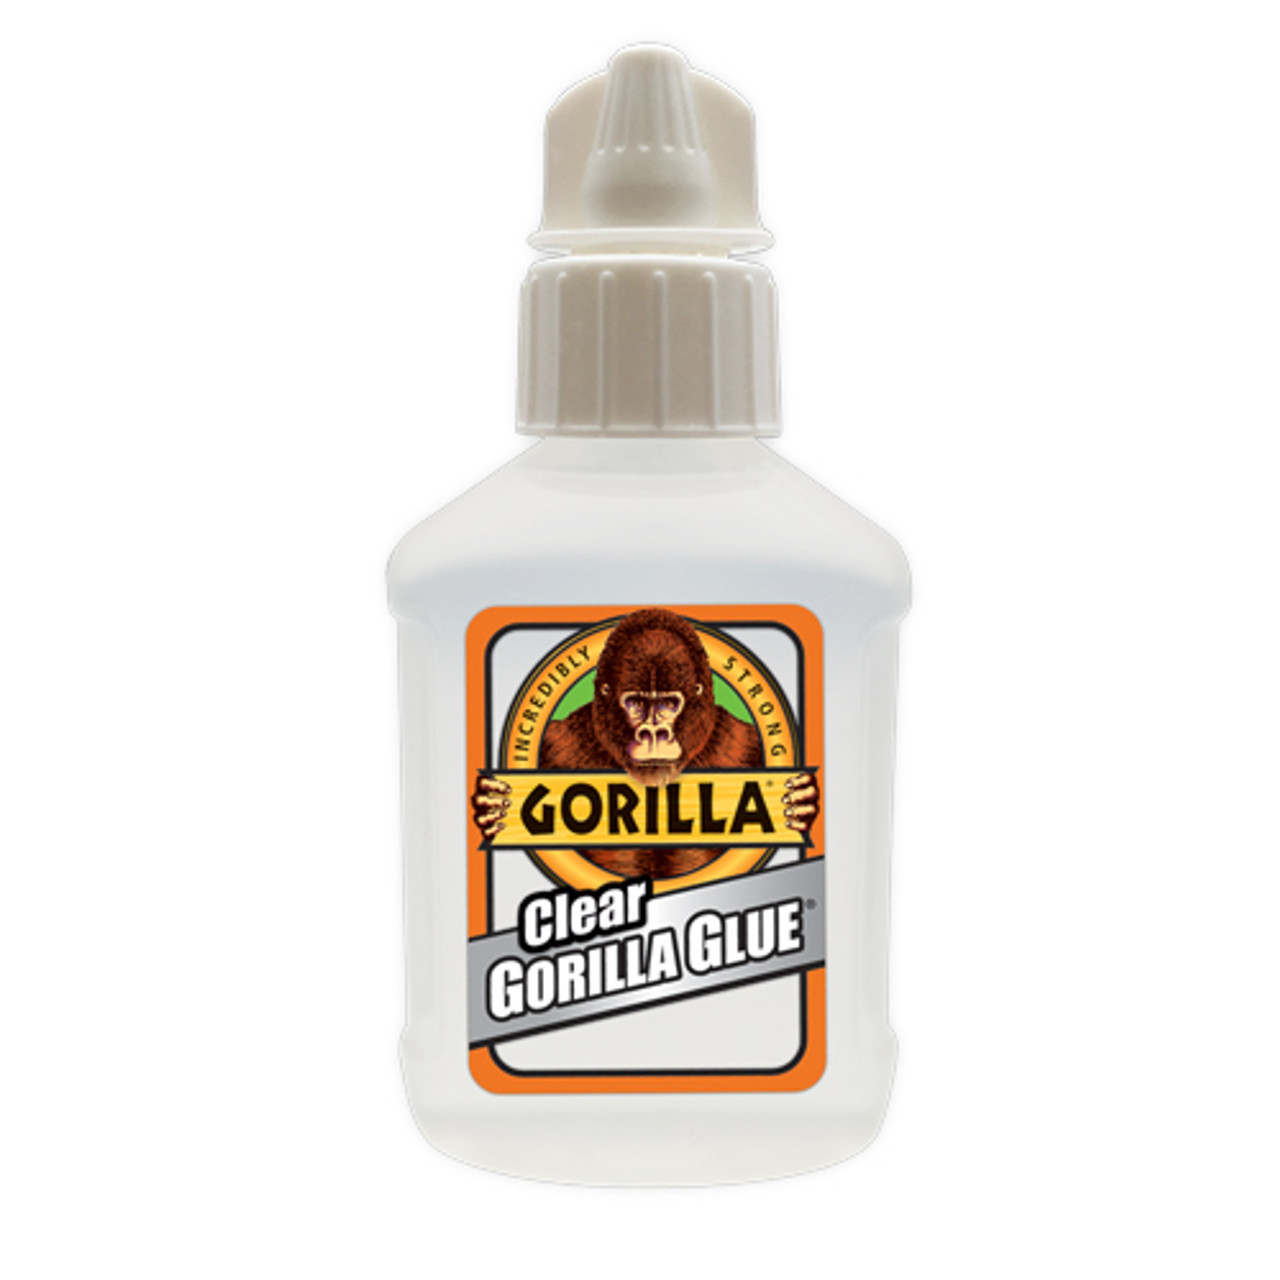 Gorilla Glue Clear, 1.75oz Bottle